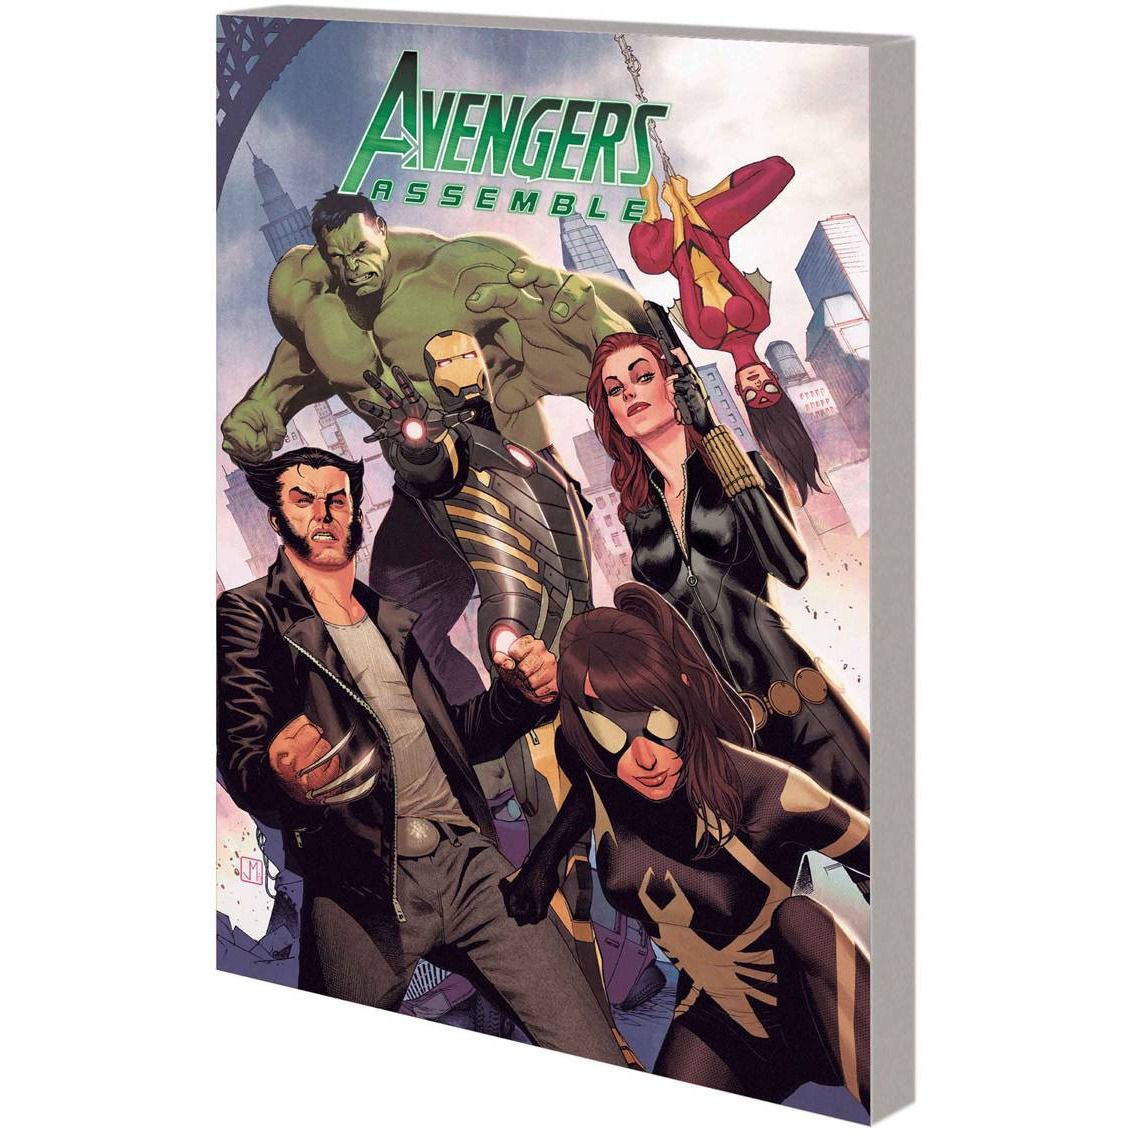  Avengers Assemble TP Forgeries of Jealousy Uncanny!